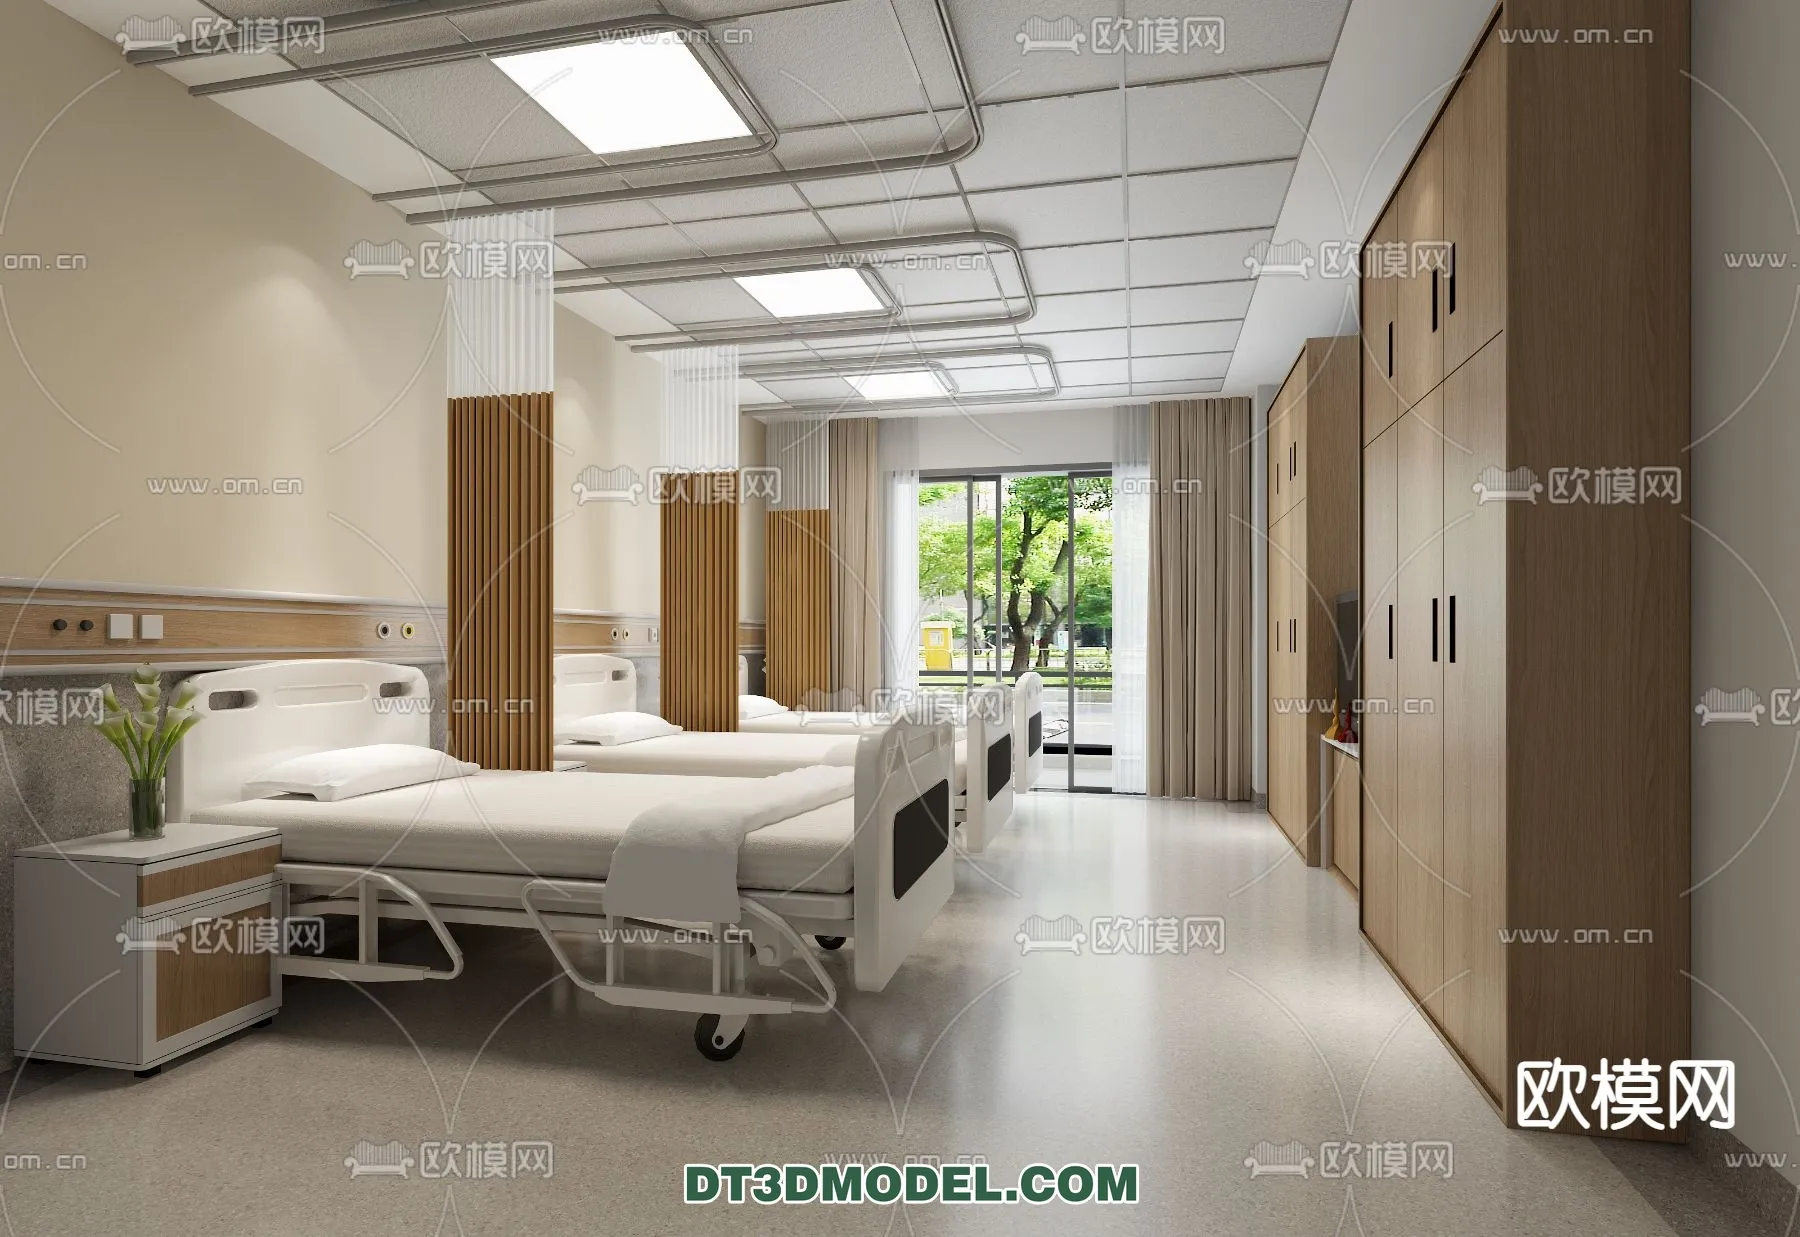 HOSPITAL 3D SCENES – MODERN – 0025